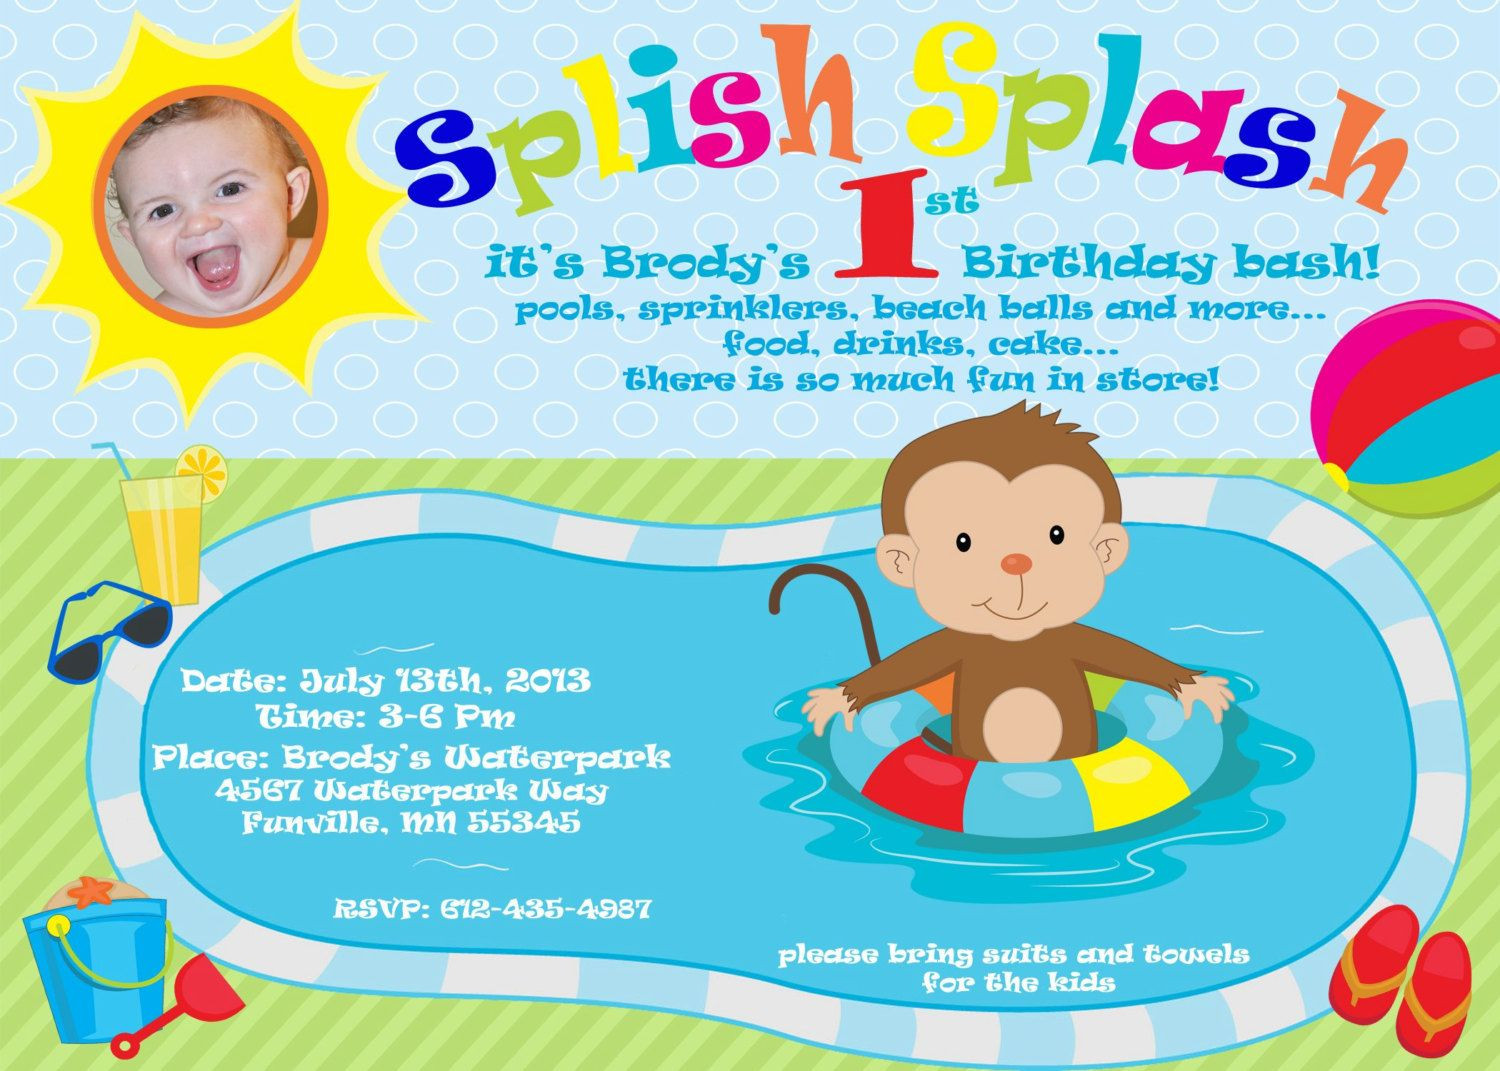 First Birthday Pool Party Ideas
 First Birthday Pool Party Splish Splash by